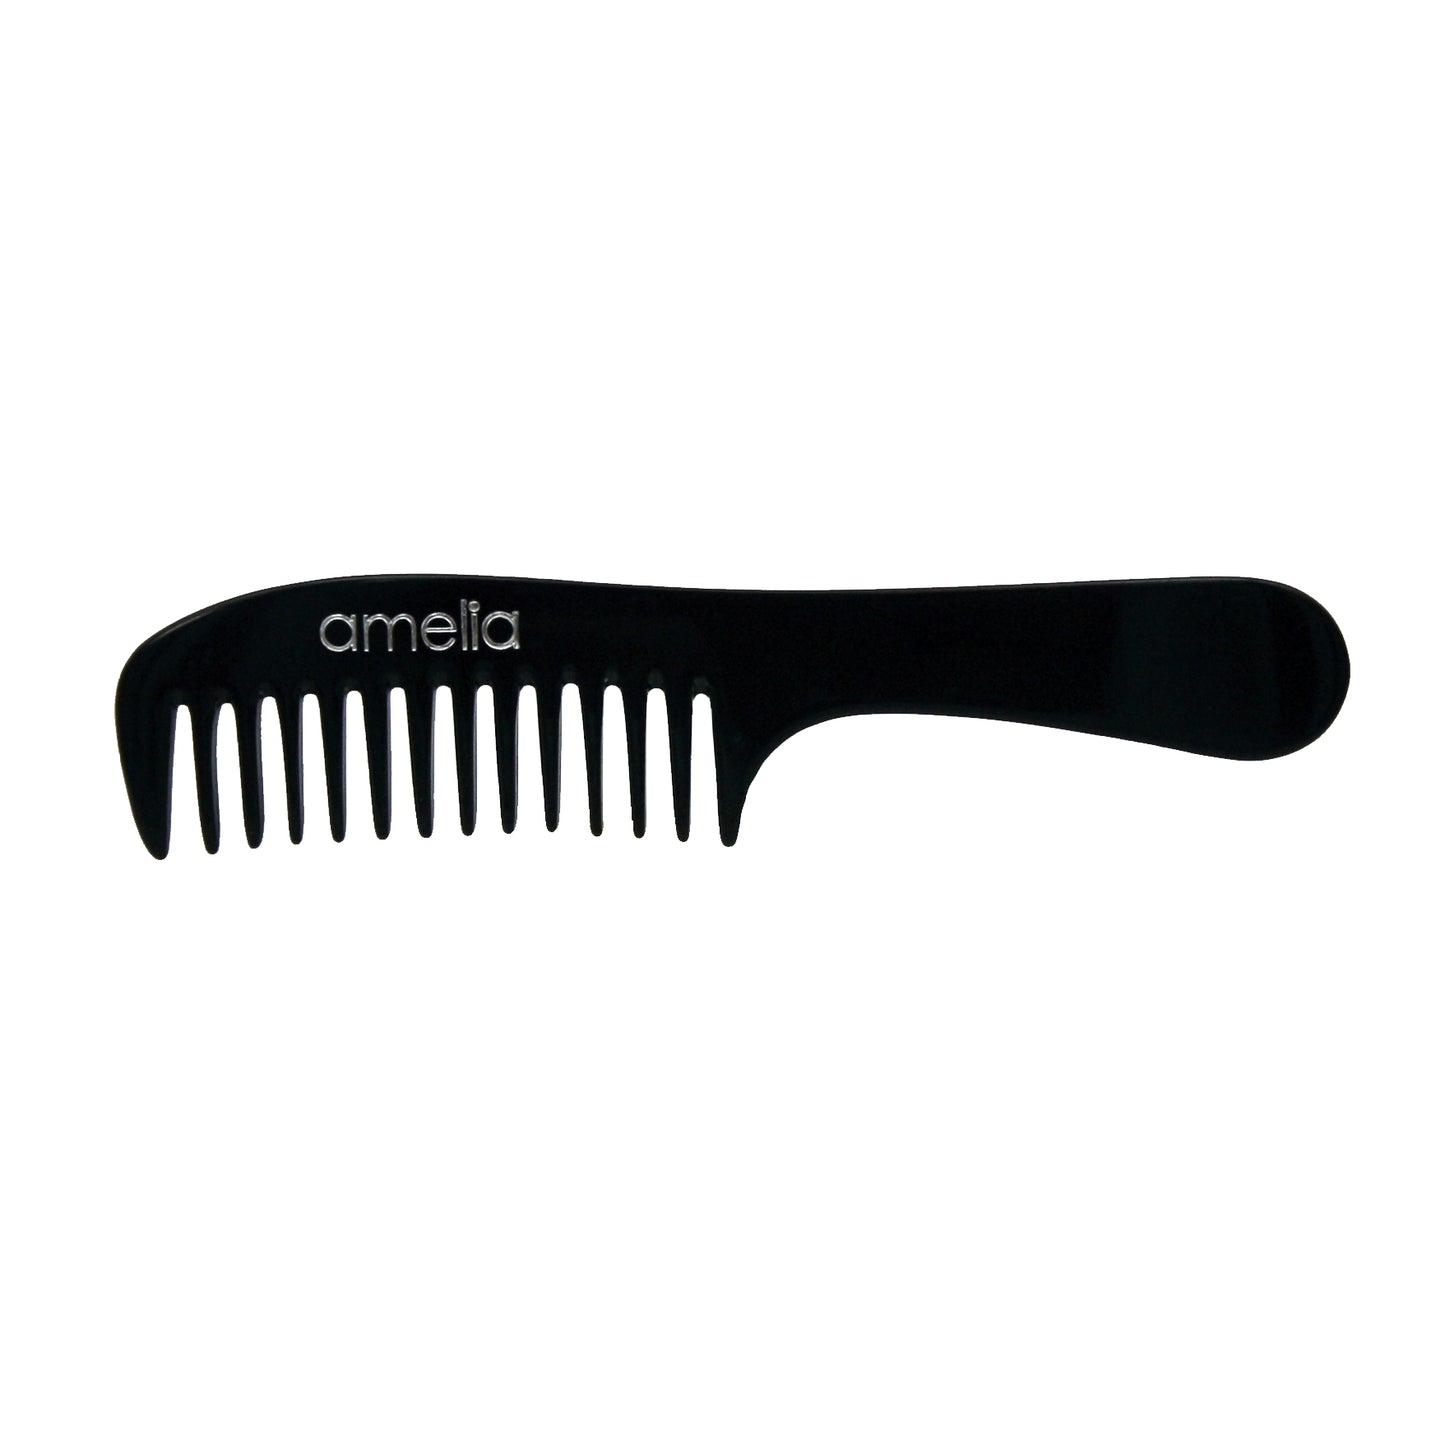 8in Cellulose Acetate Handle Comb - Black Color